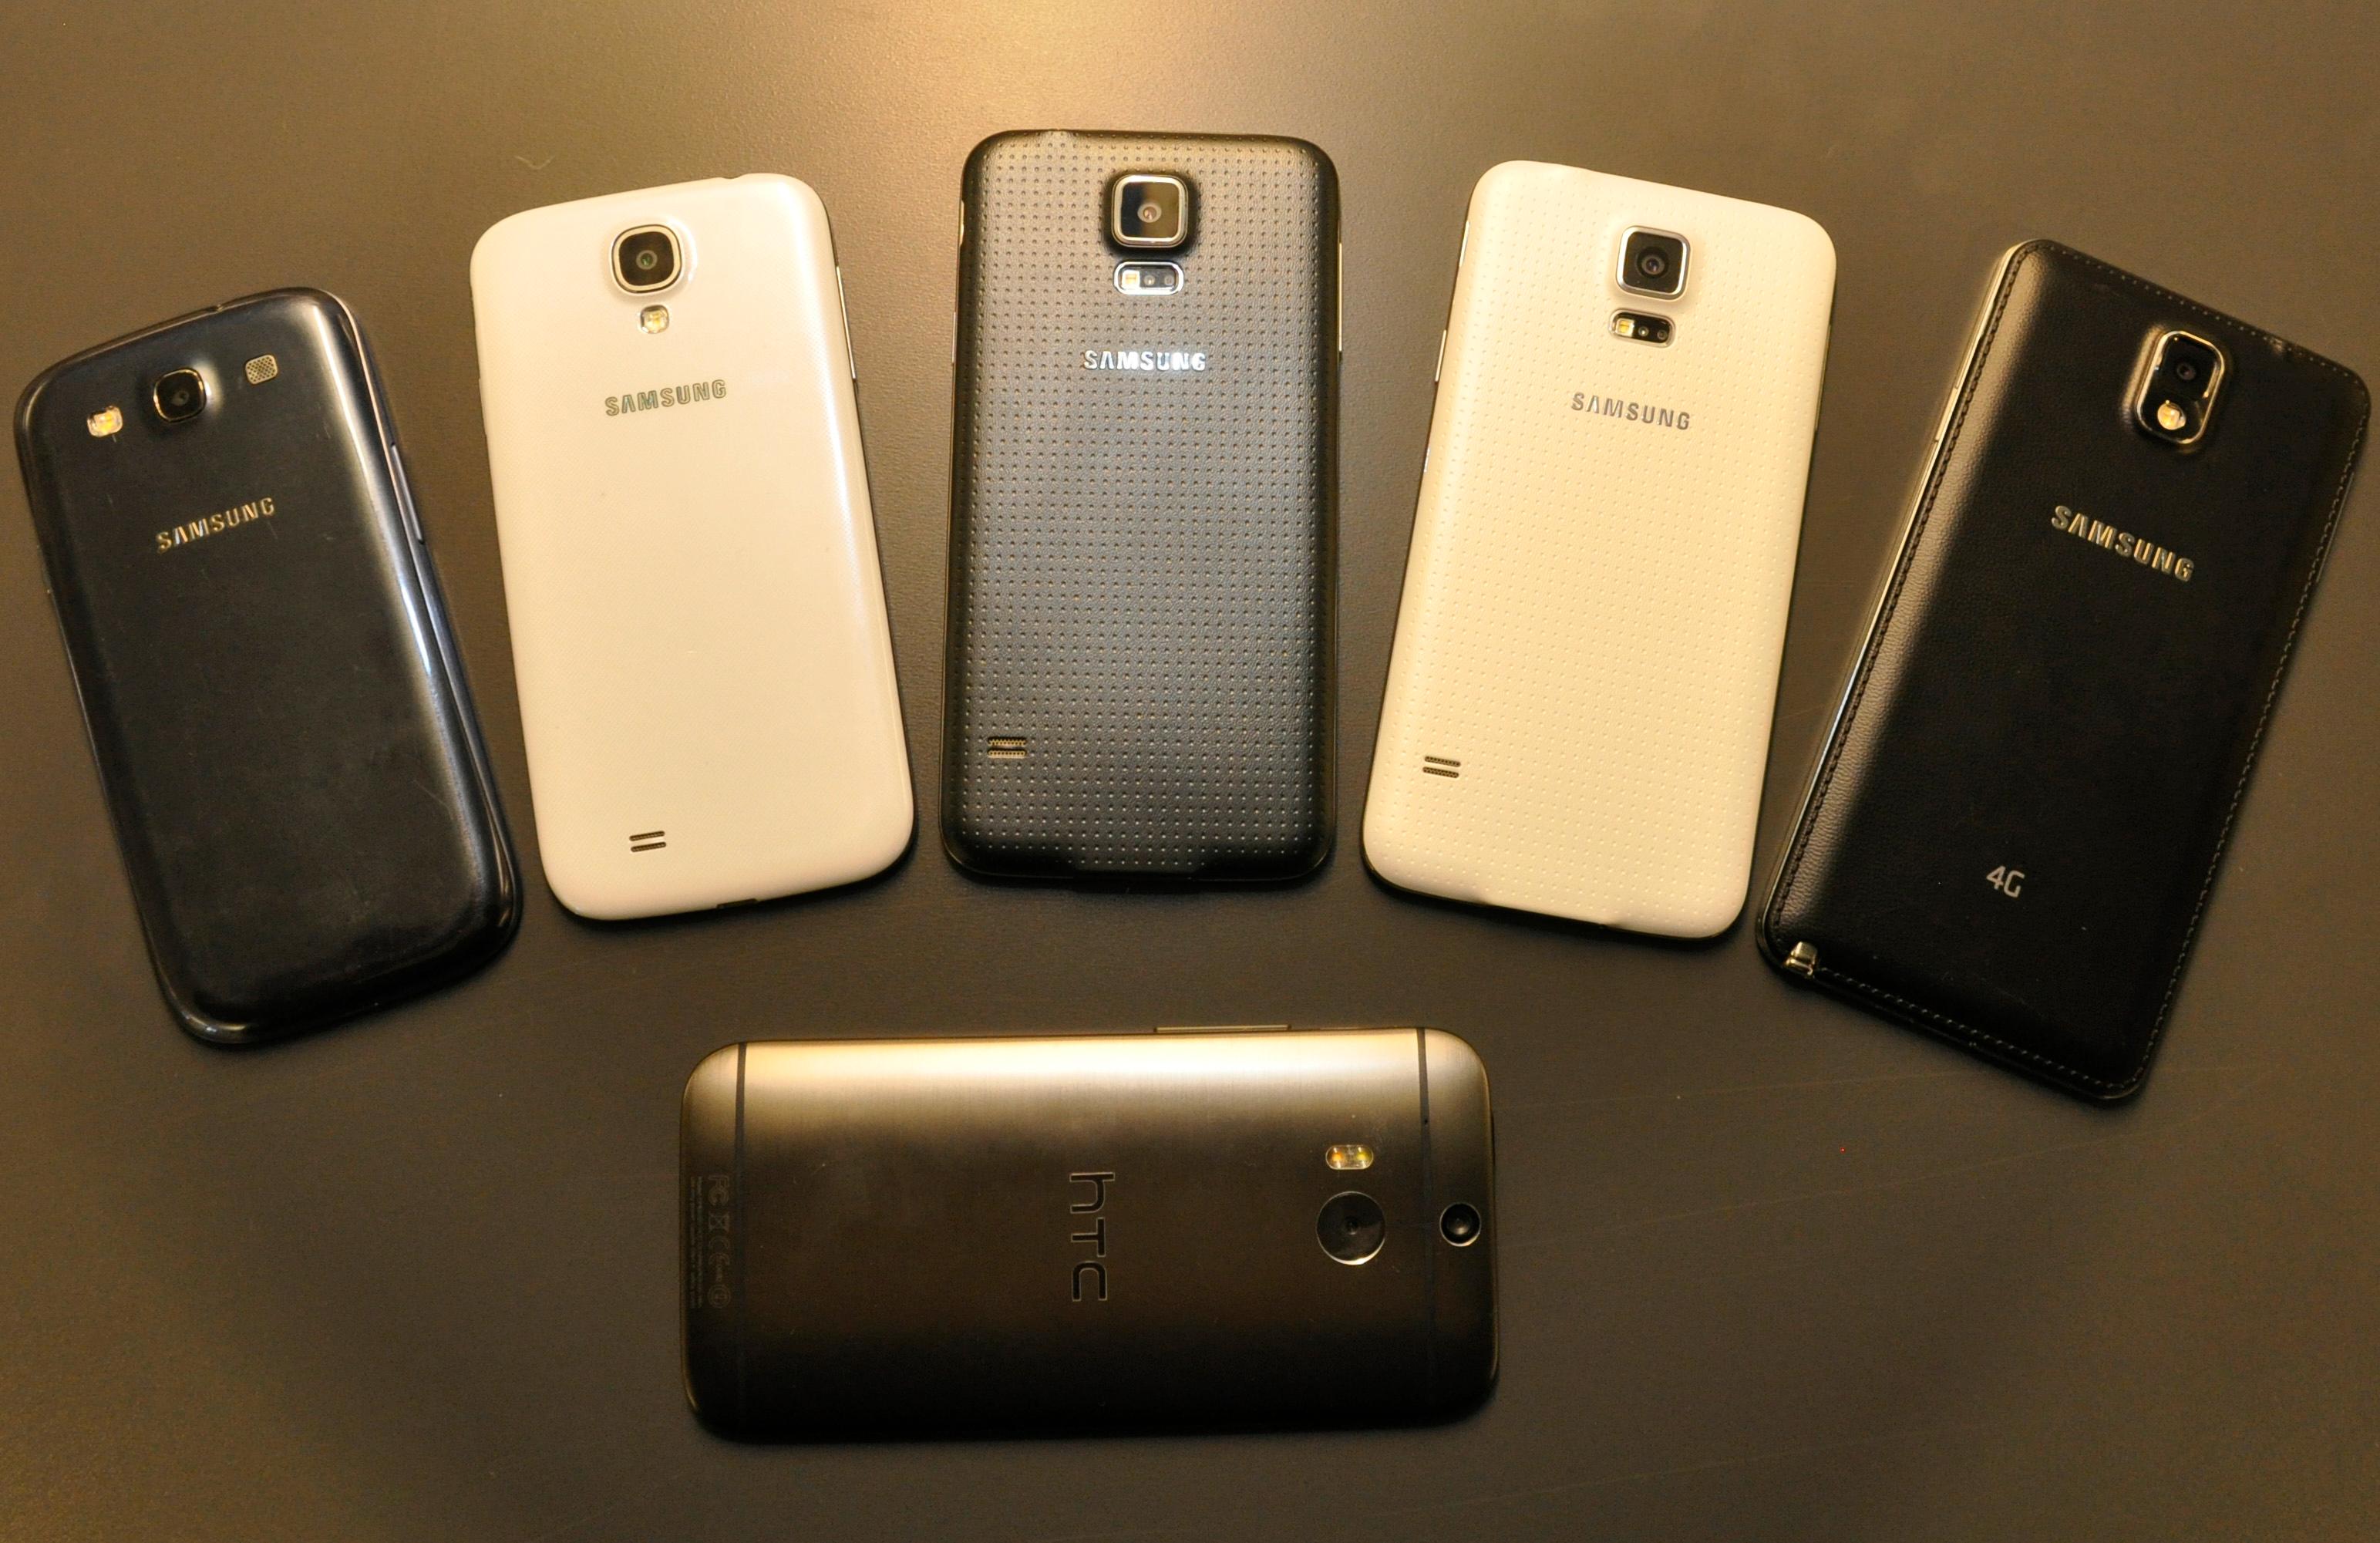 Fra venstre; Galaxy S3, Galaxy S4, Galaxy S5 i to ulike farger, og Galaxy Note 3. Nederst - utfordreren One (M8) fra HTC.Foto: Finn Jarle Kvalheim, Amobil.no